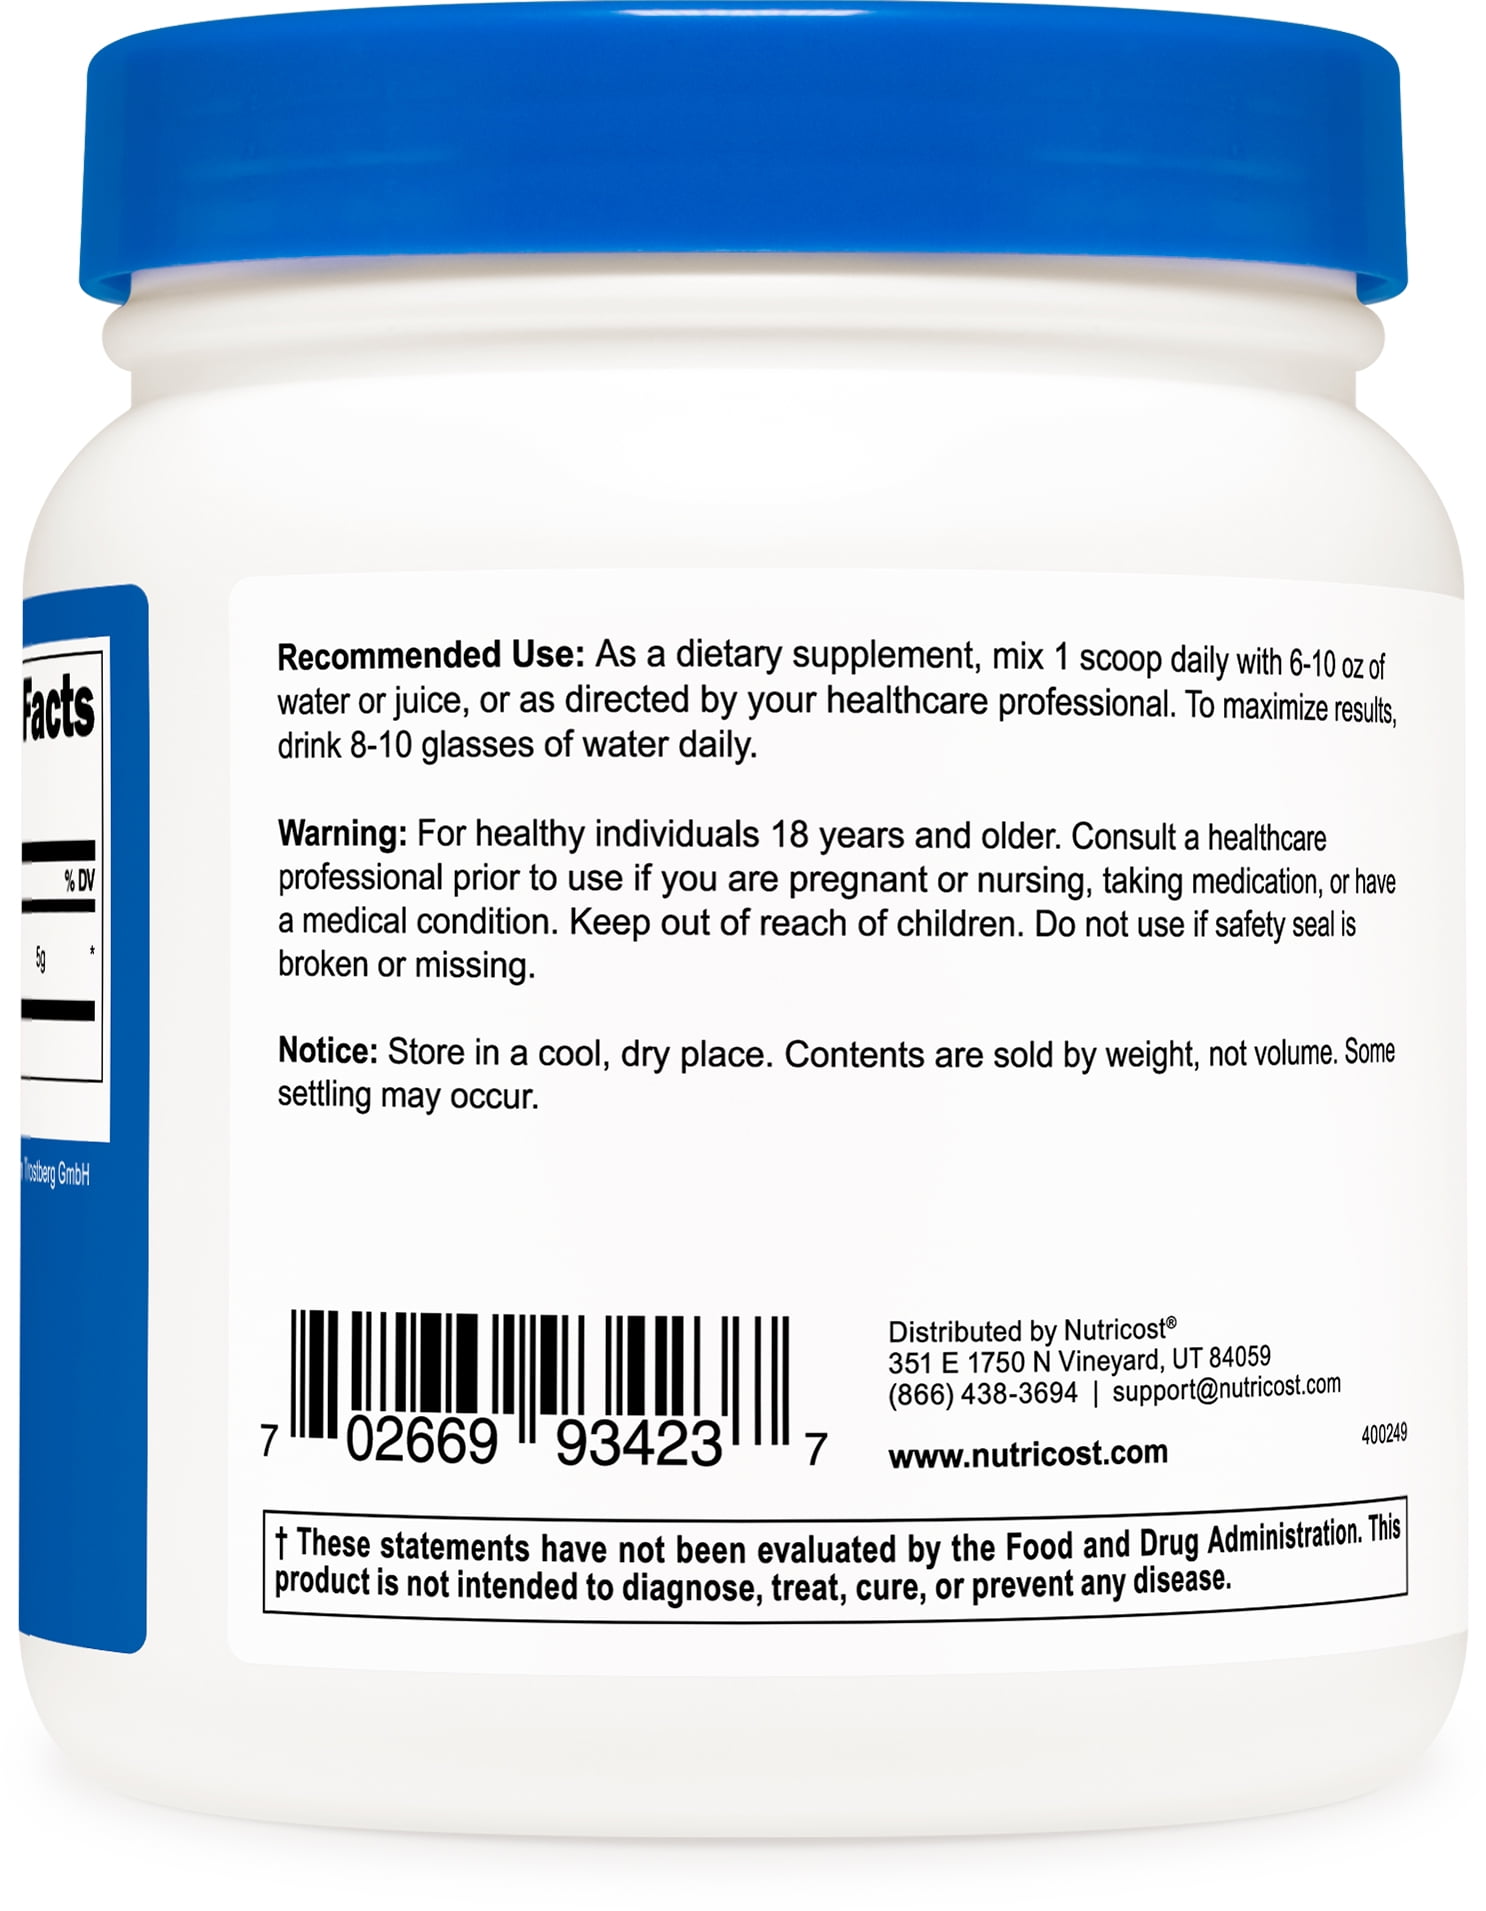 Nutricost Creatine Monohydrate (Creapure ) Powder 500 Grams